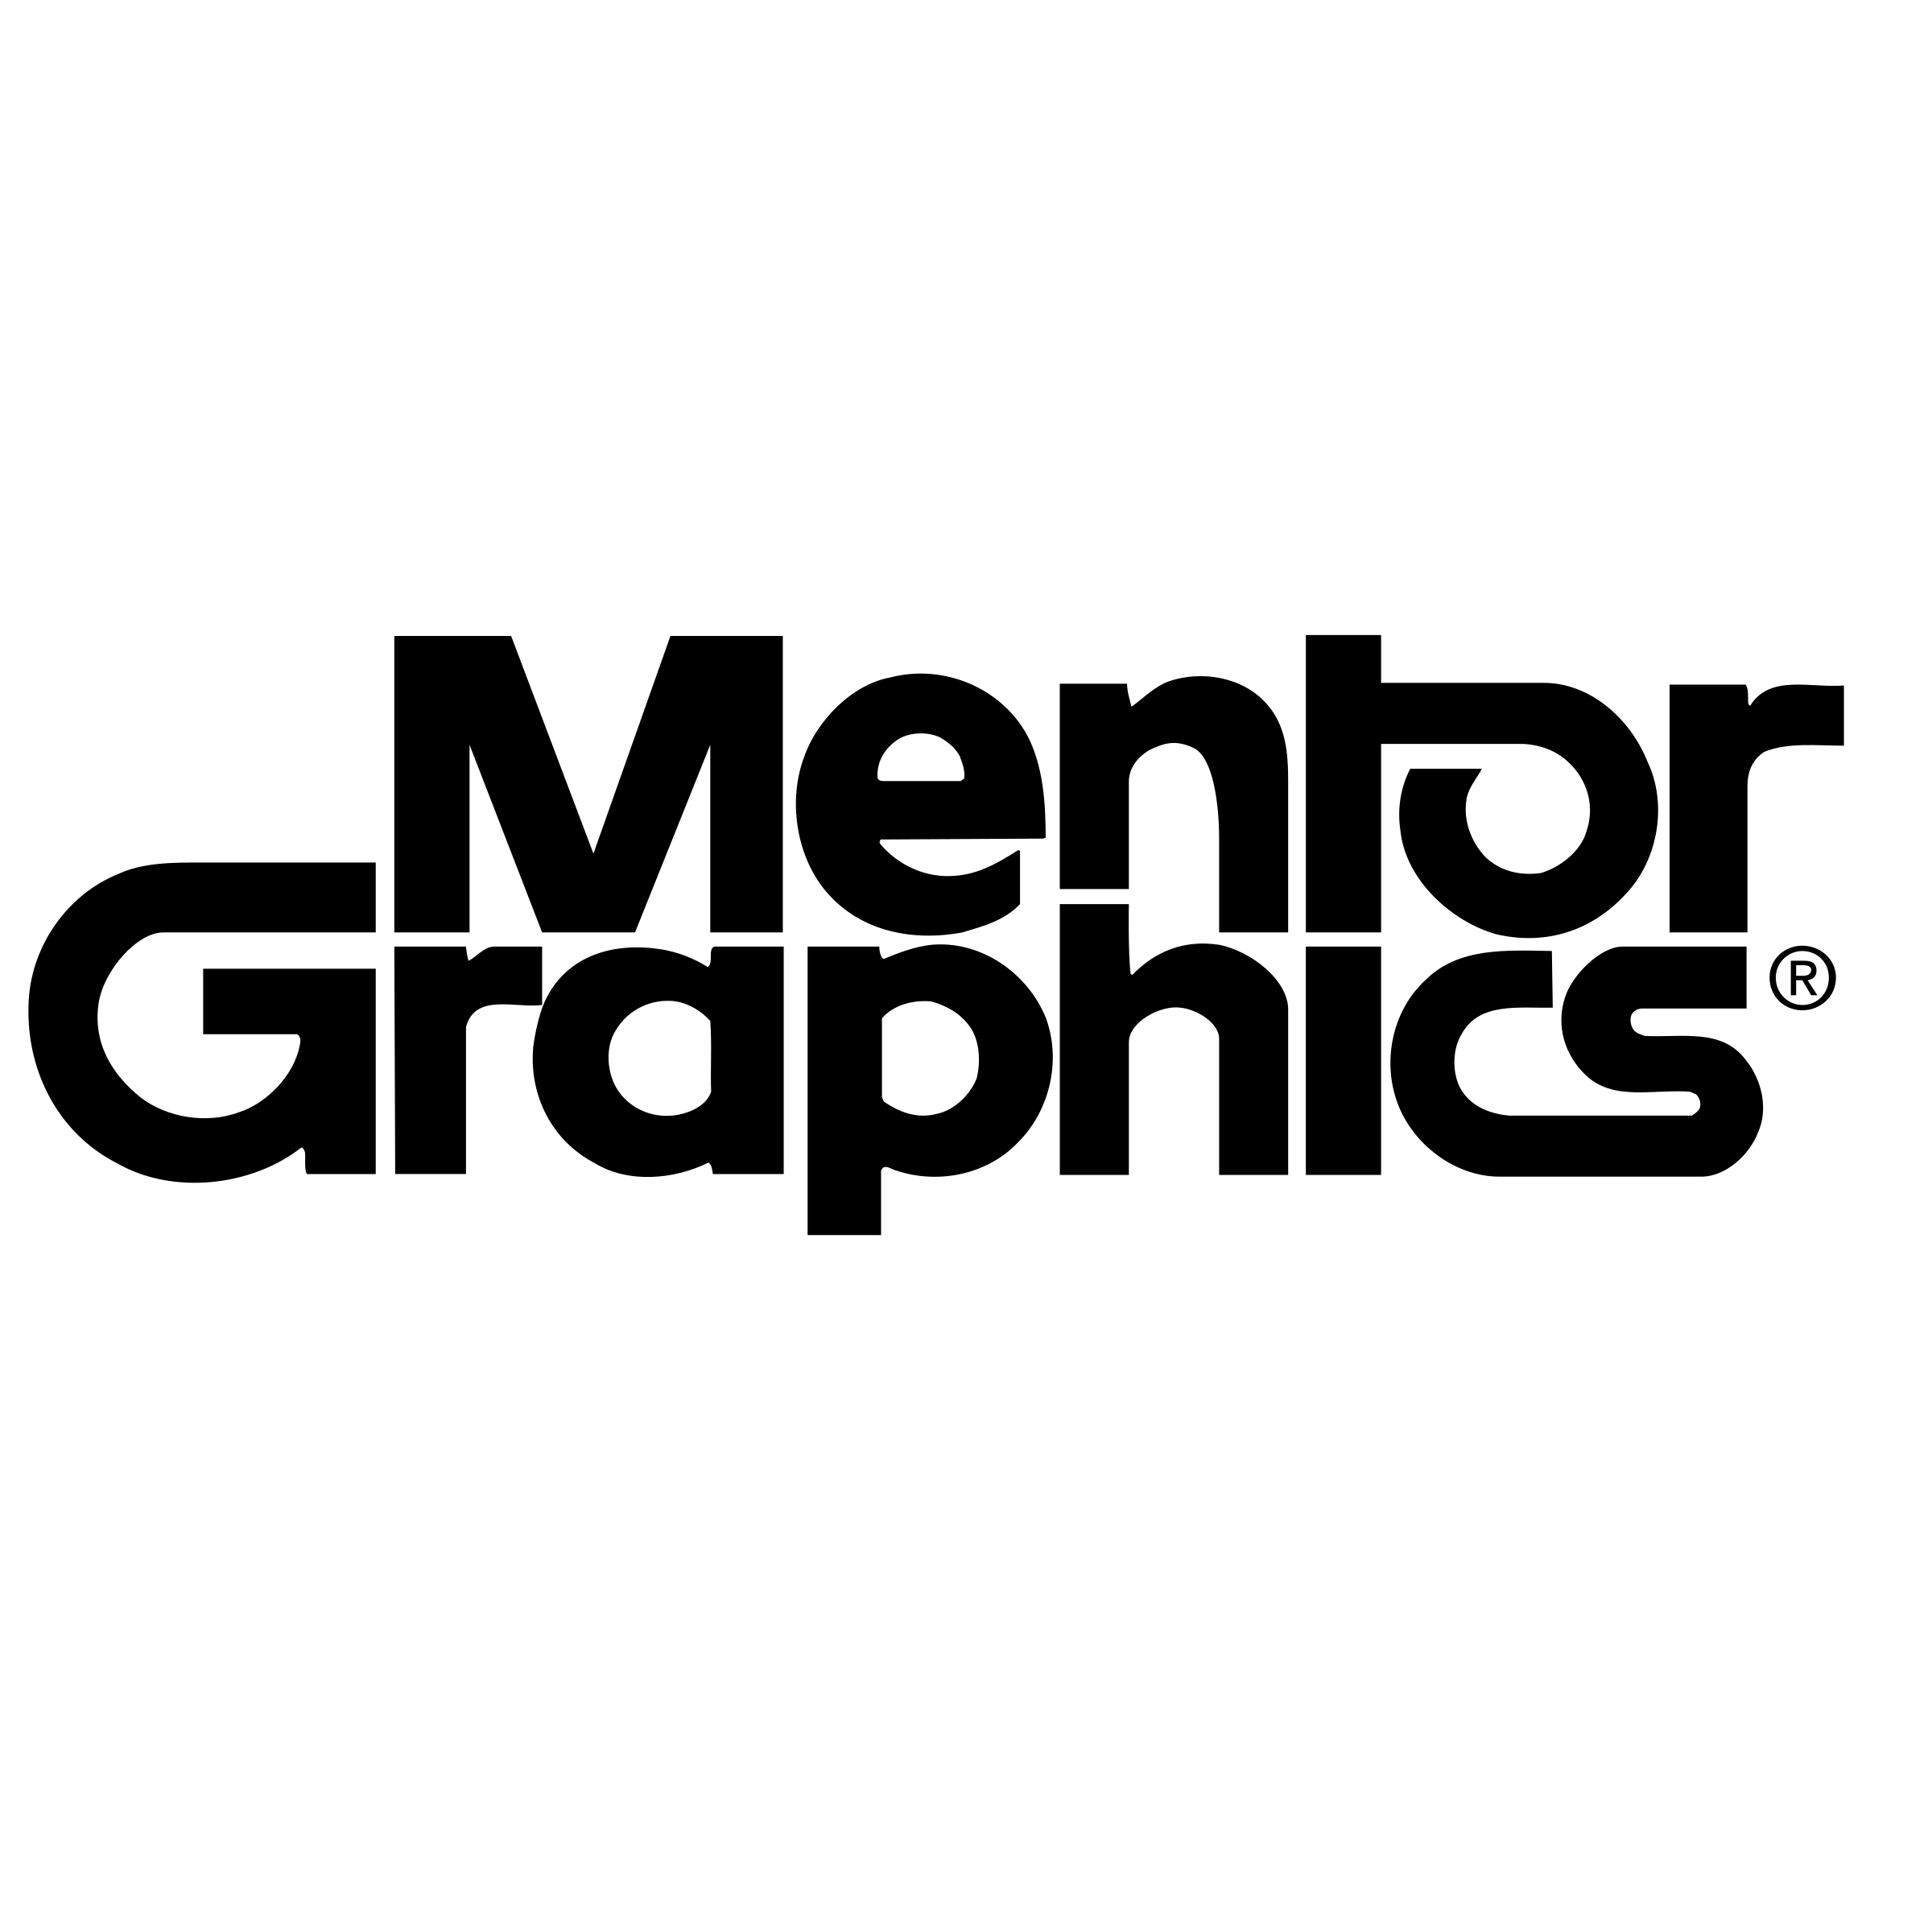 Mentor Logo - Mentor Graphics Logo PNG Transparent & SVG Vector - Freebie Supply